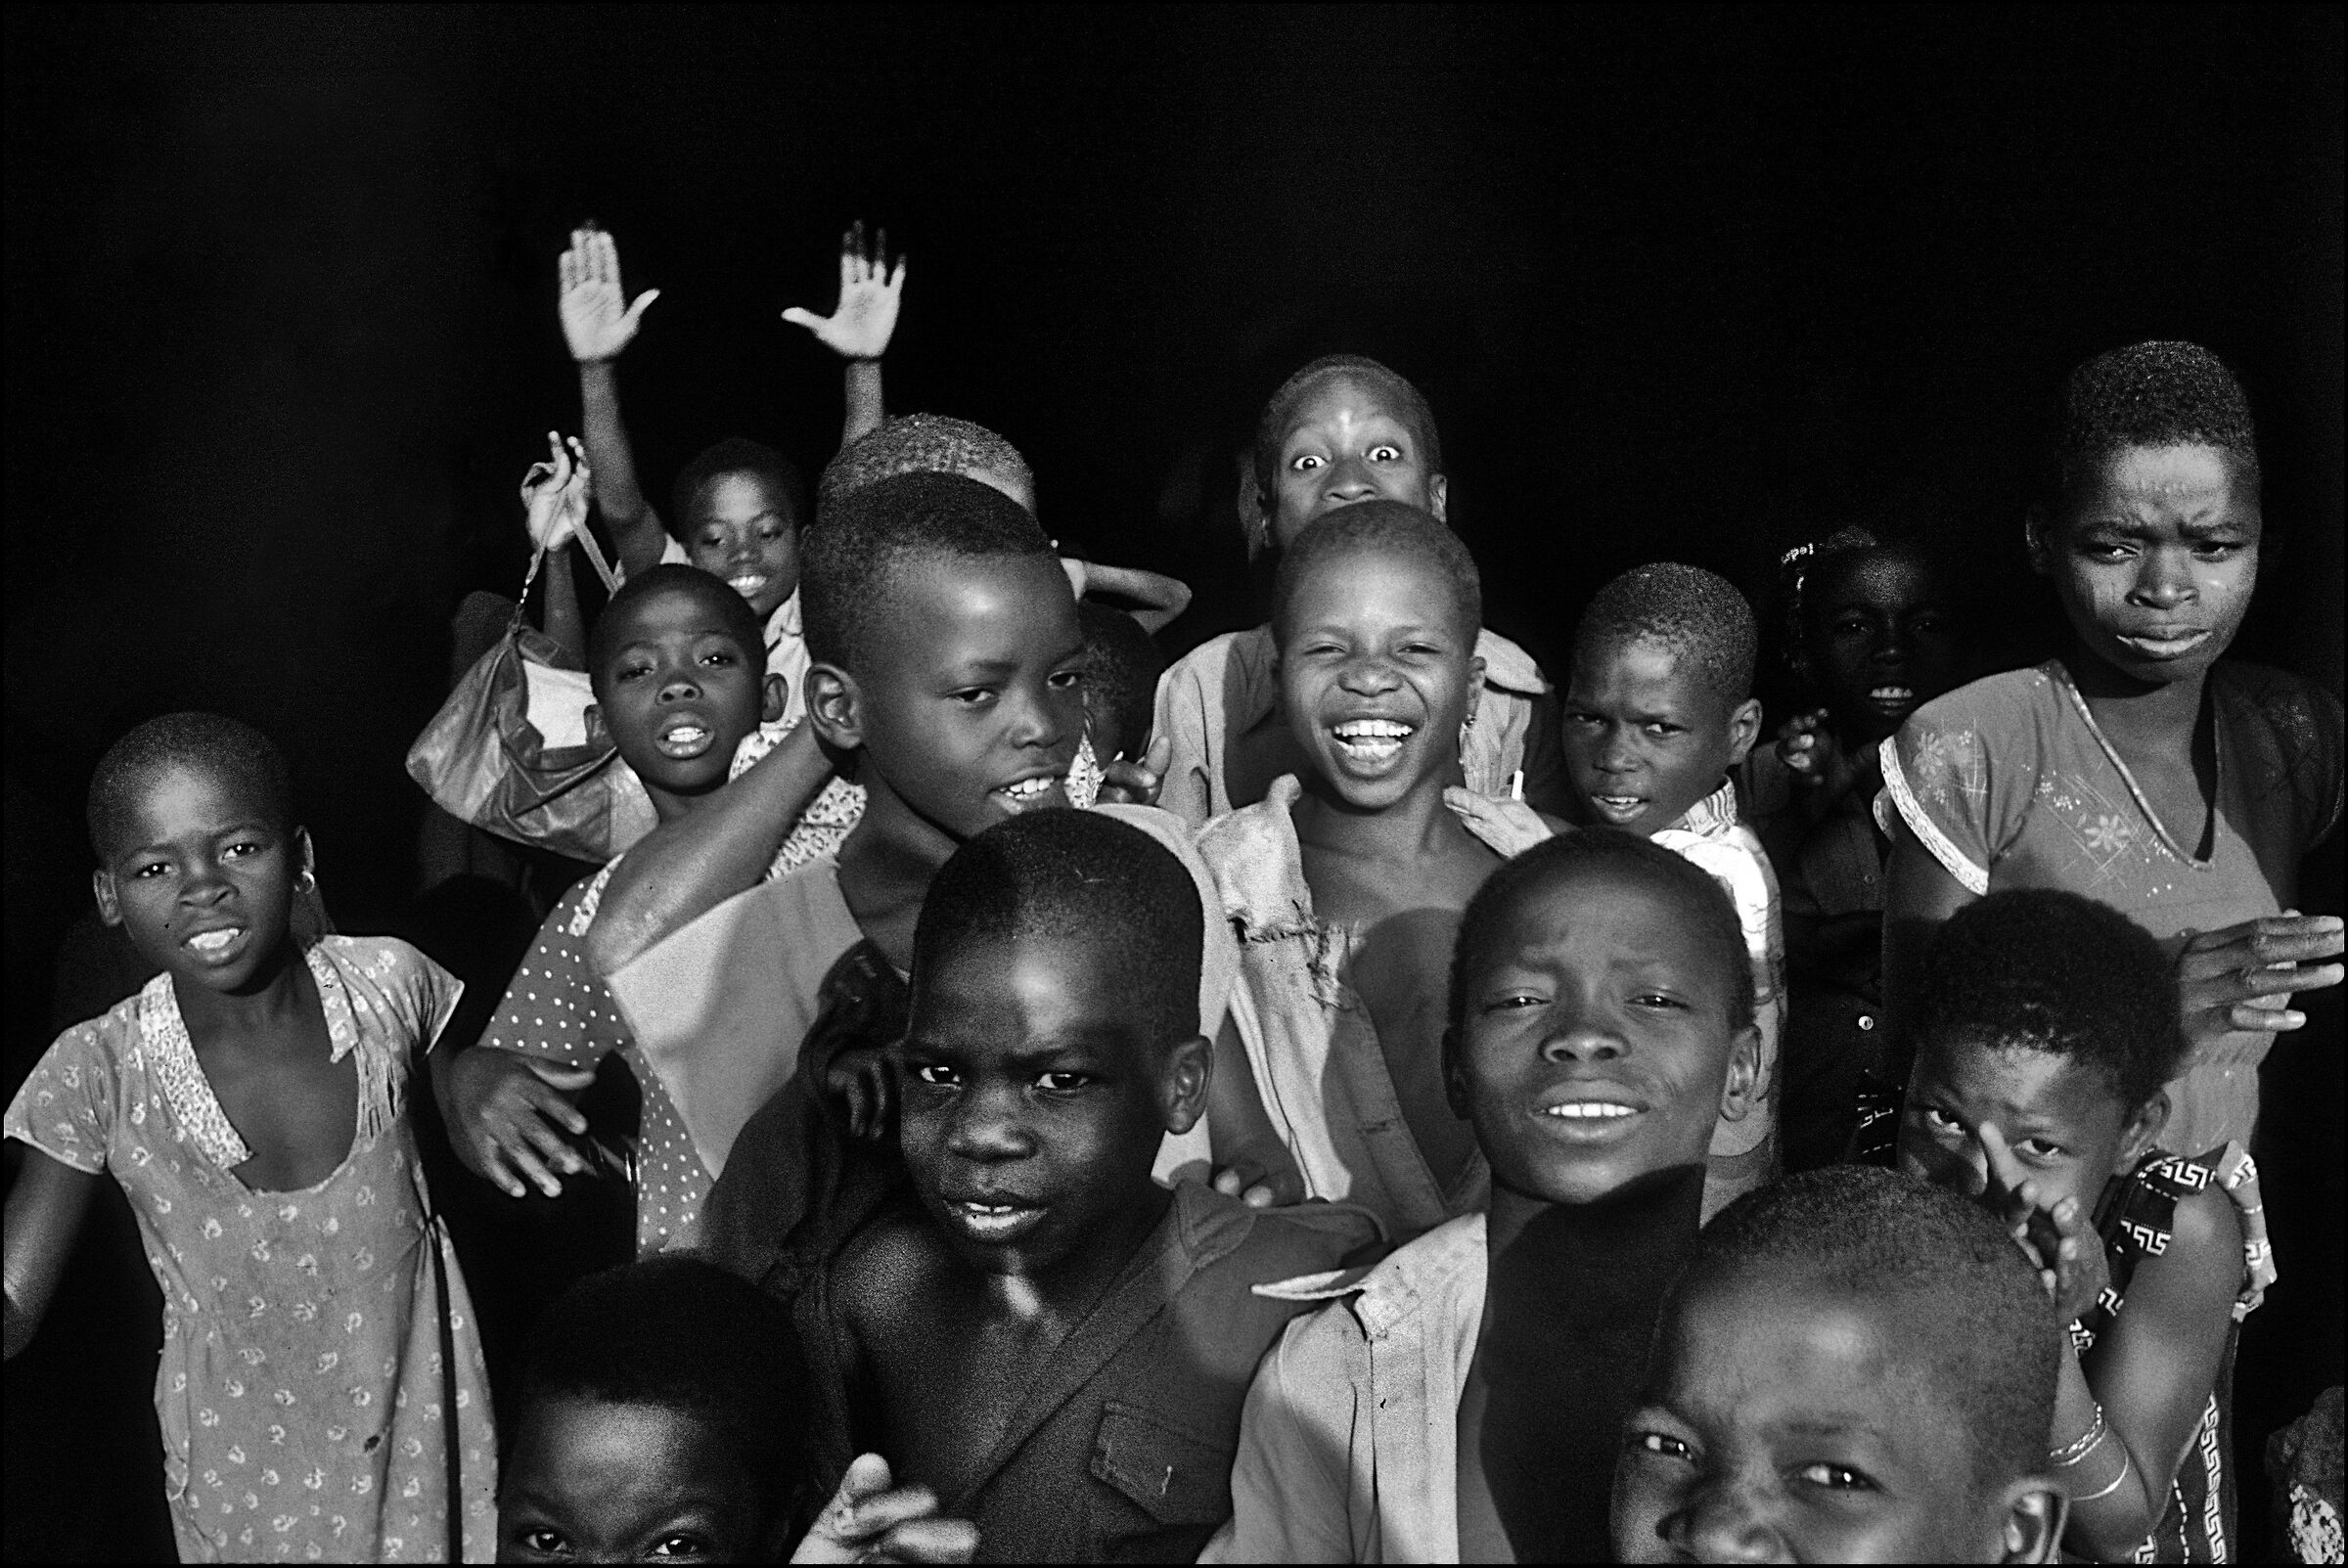 1986 Burkina Faso "end of classes"...